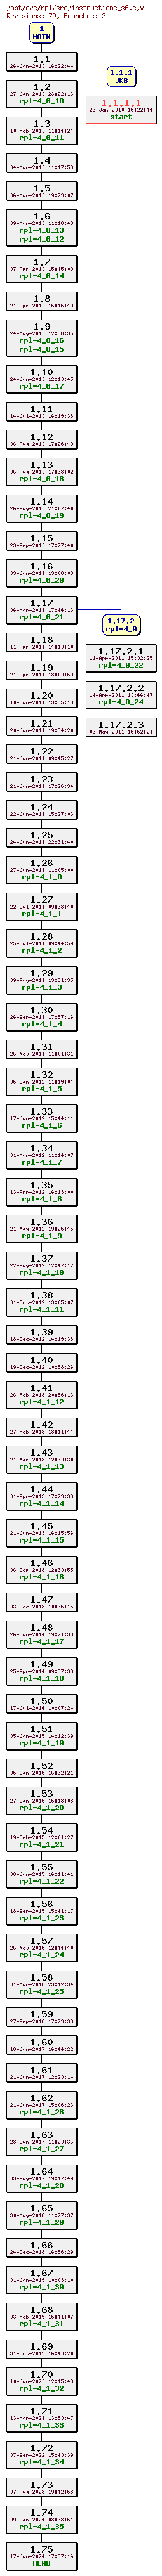 Revision graph of rpl/src/instructions_s6.c